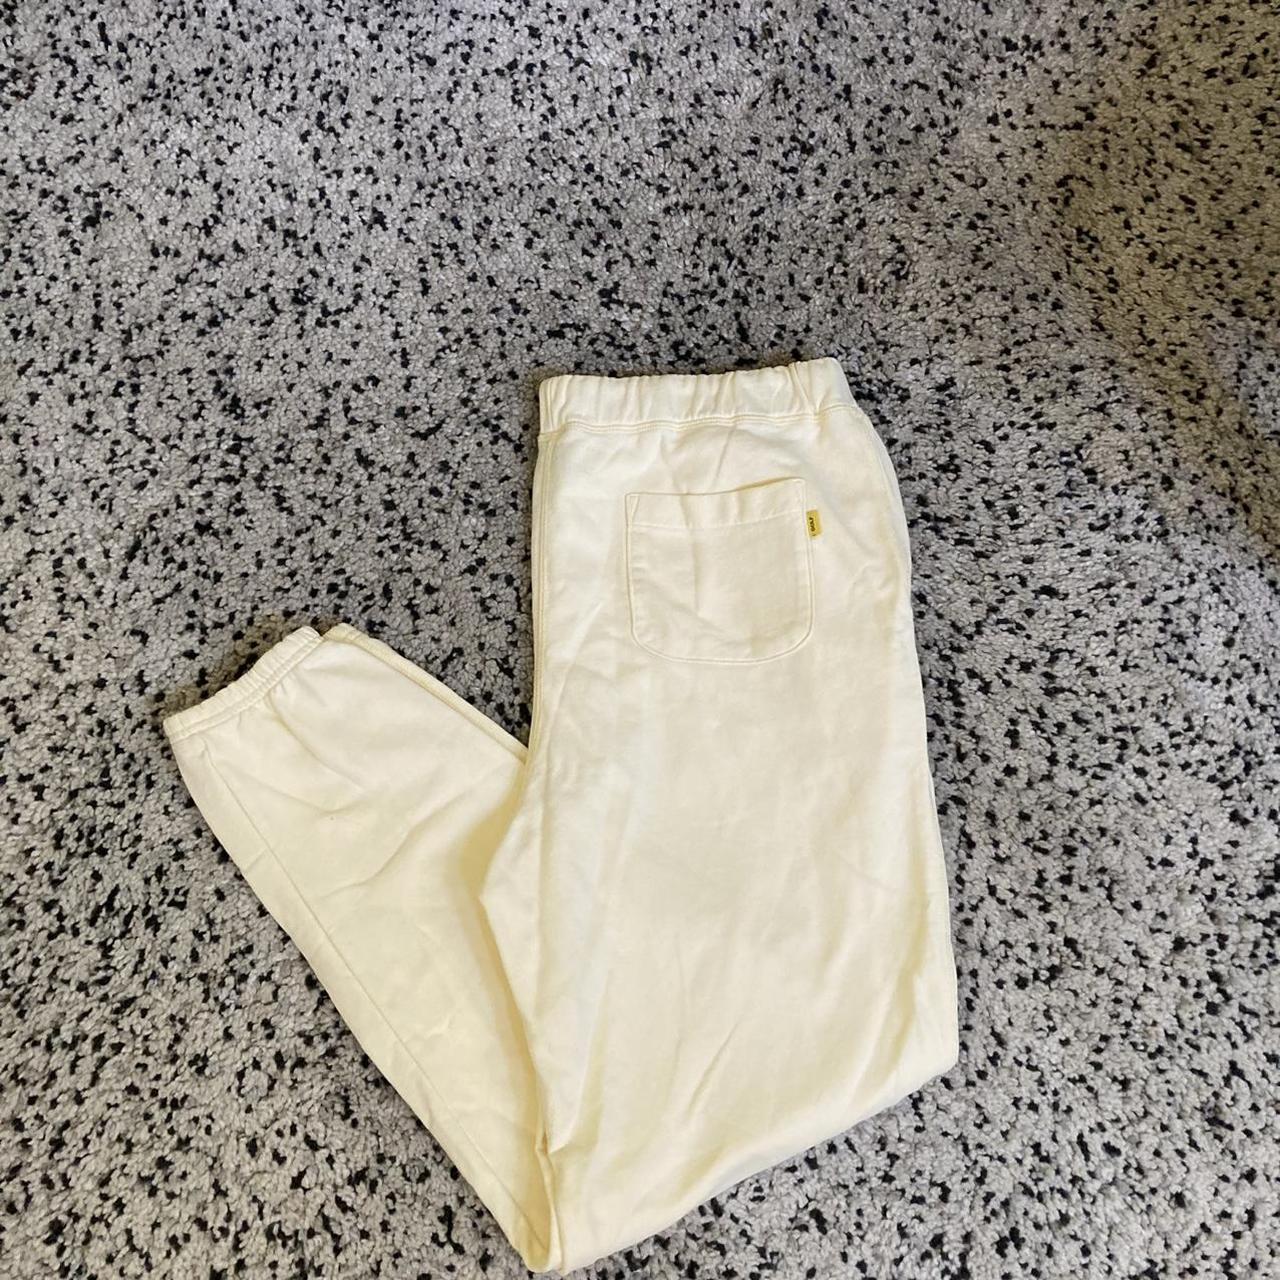 Product Image 3 - Yellow Golf Wang sweatpants. Pastel